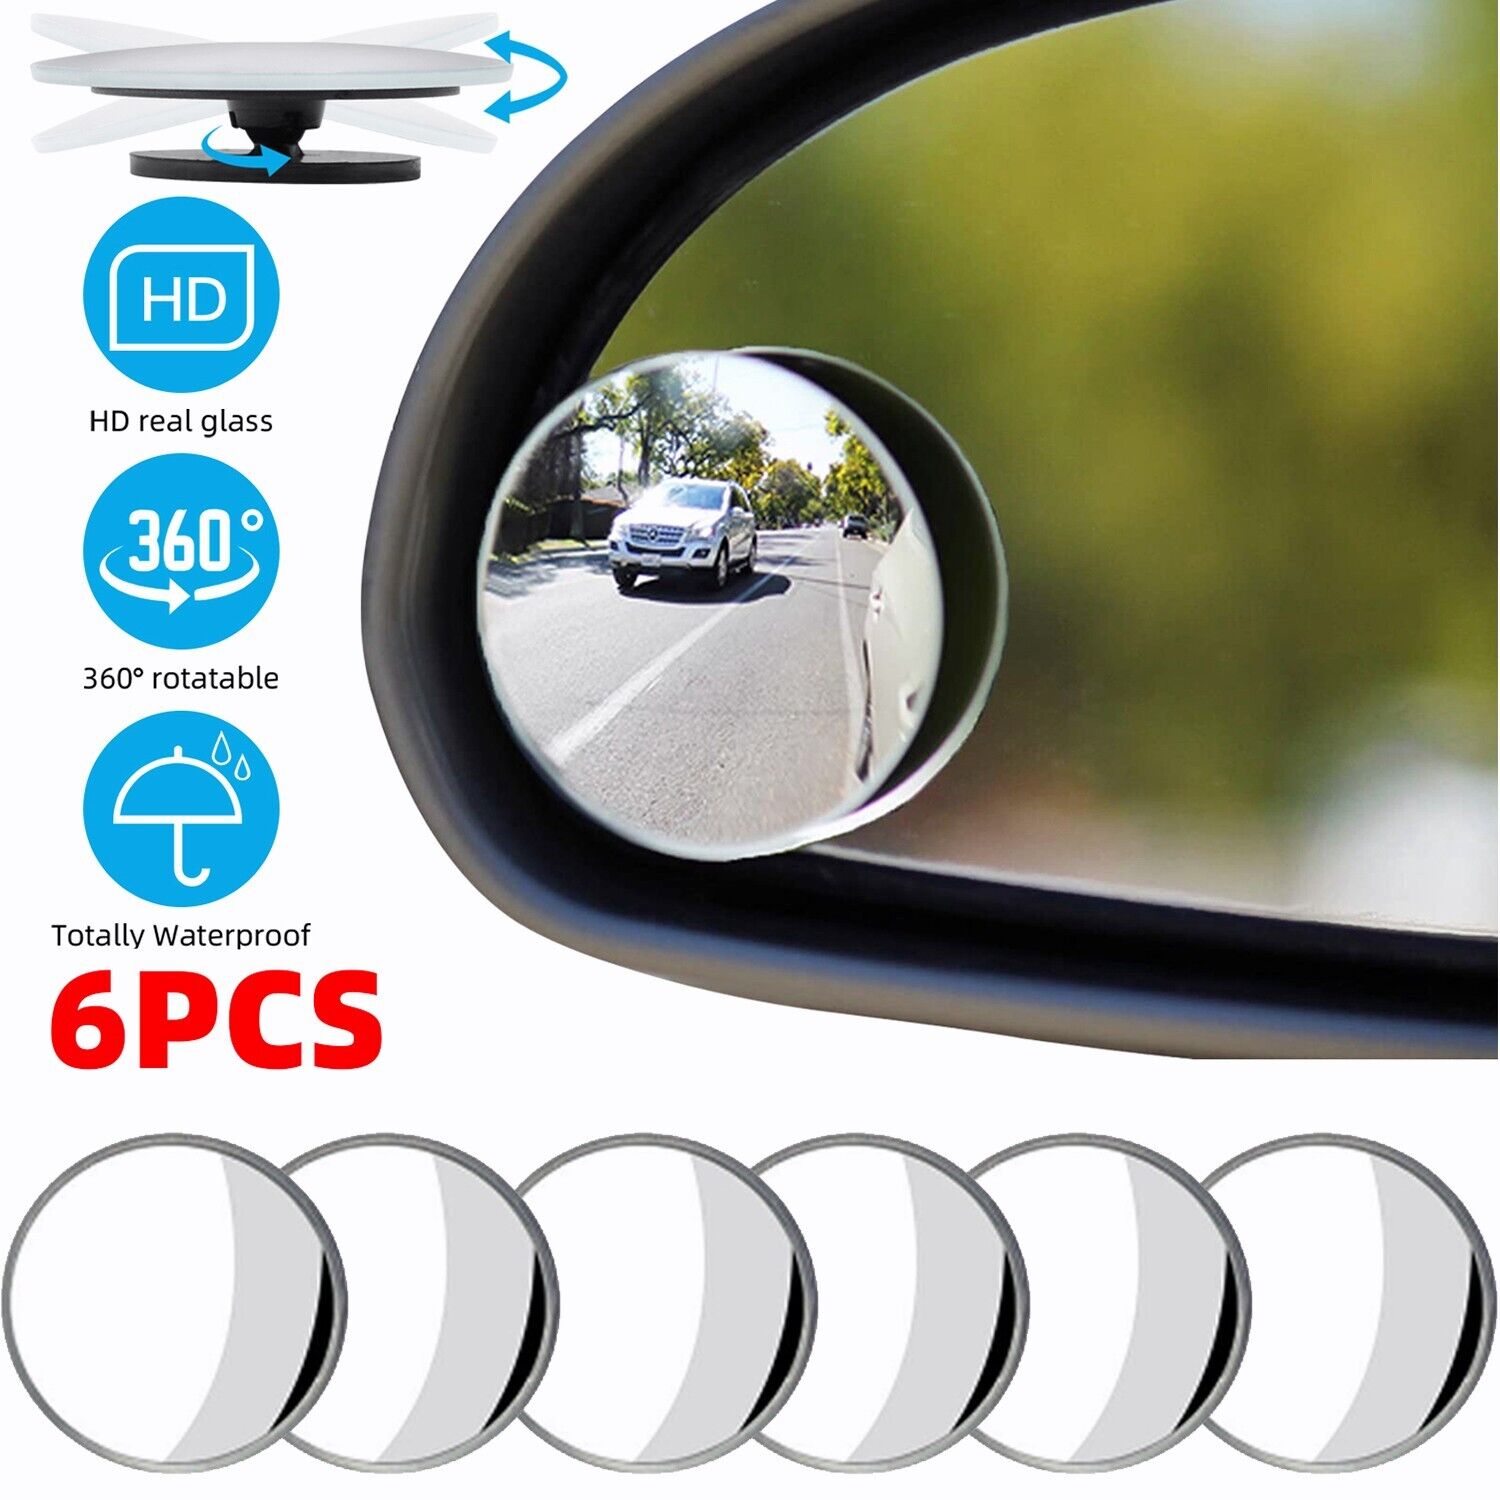 6PCS Car Blind Spot Mirrors Round HD Glass Convex 360° Side Rear View Mirror US